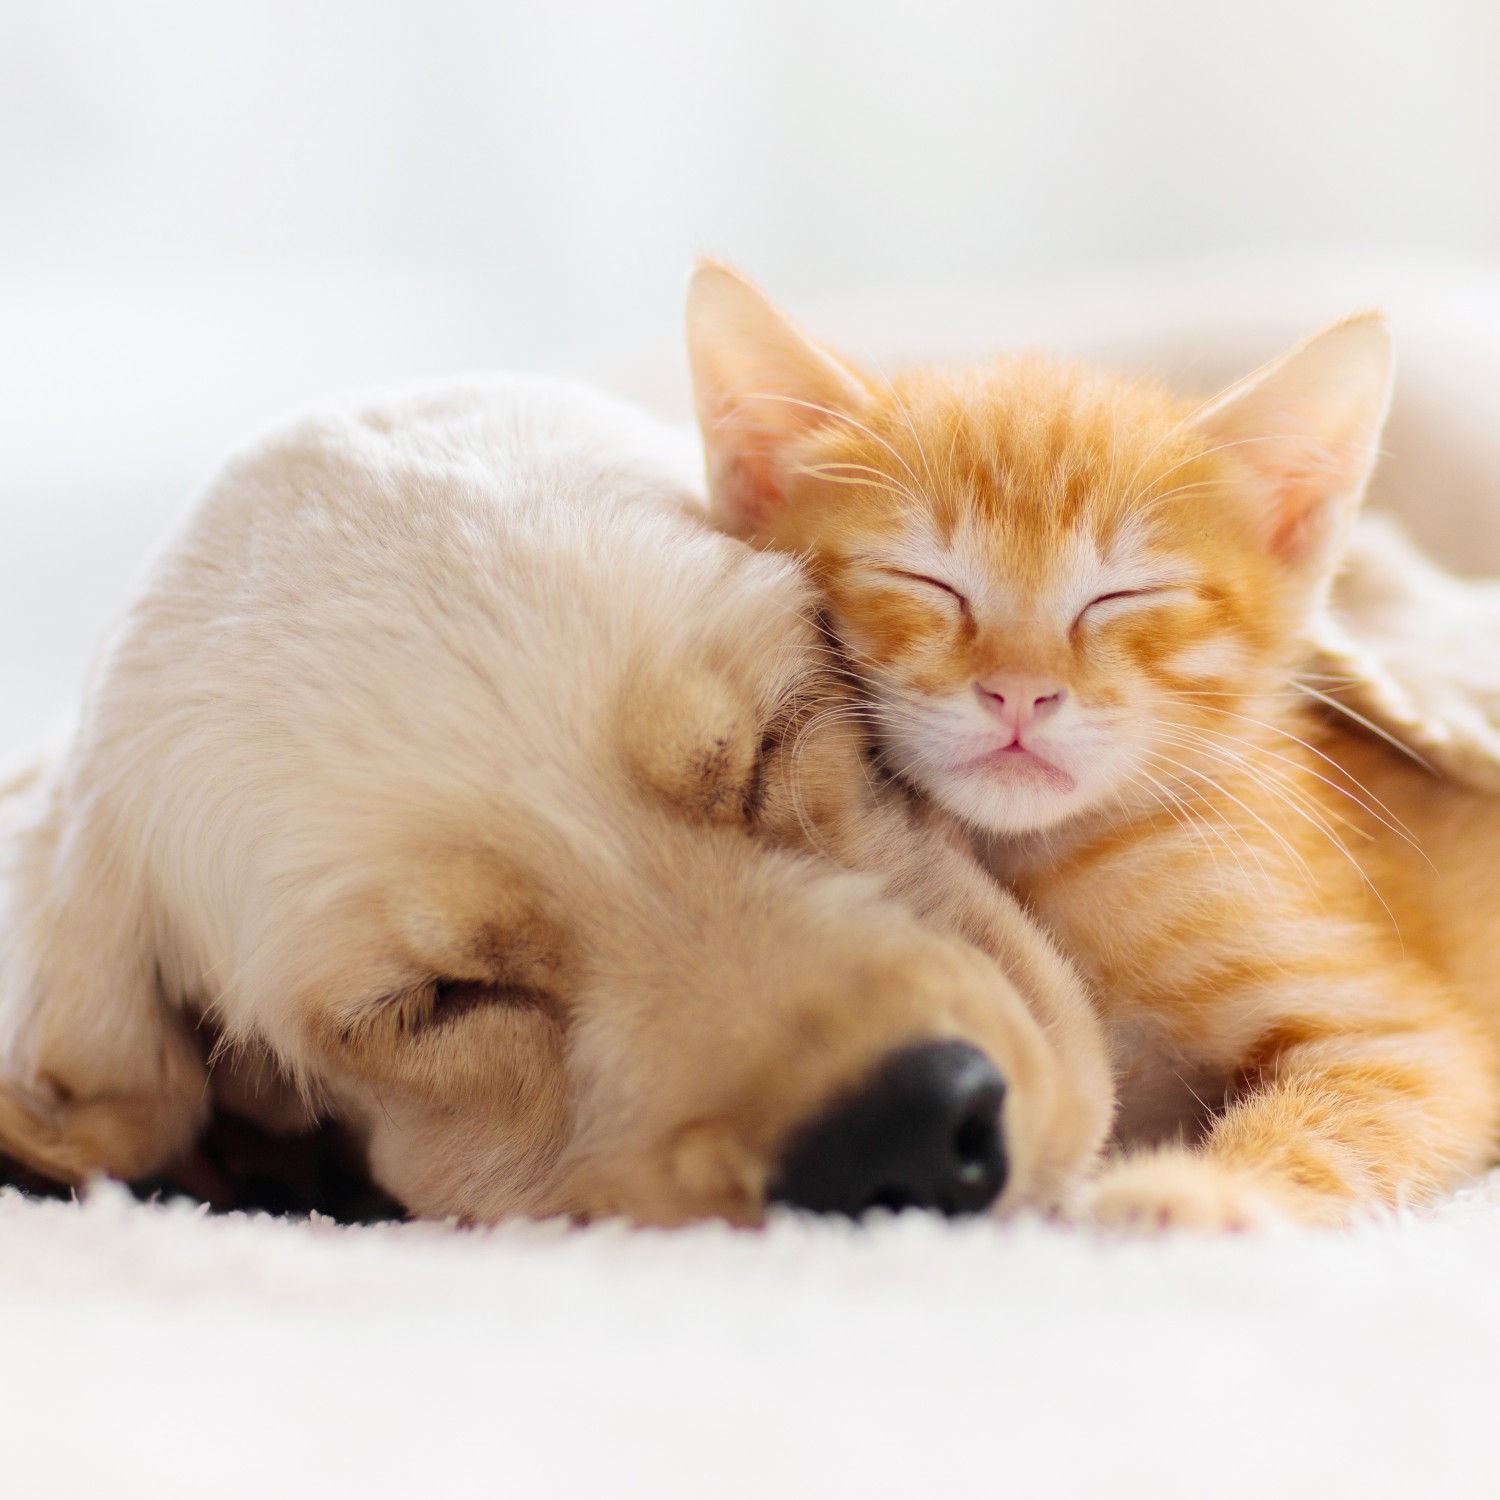 Puppy & Kitten Cuddling